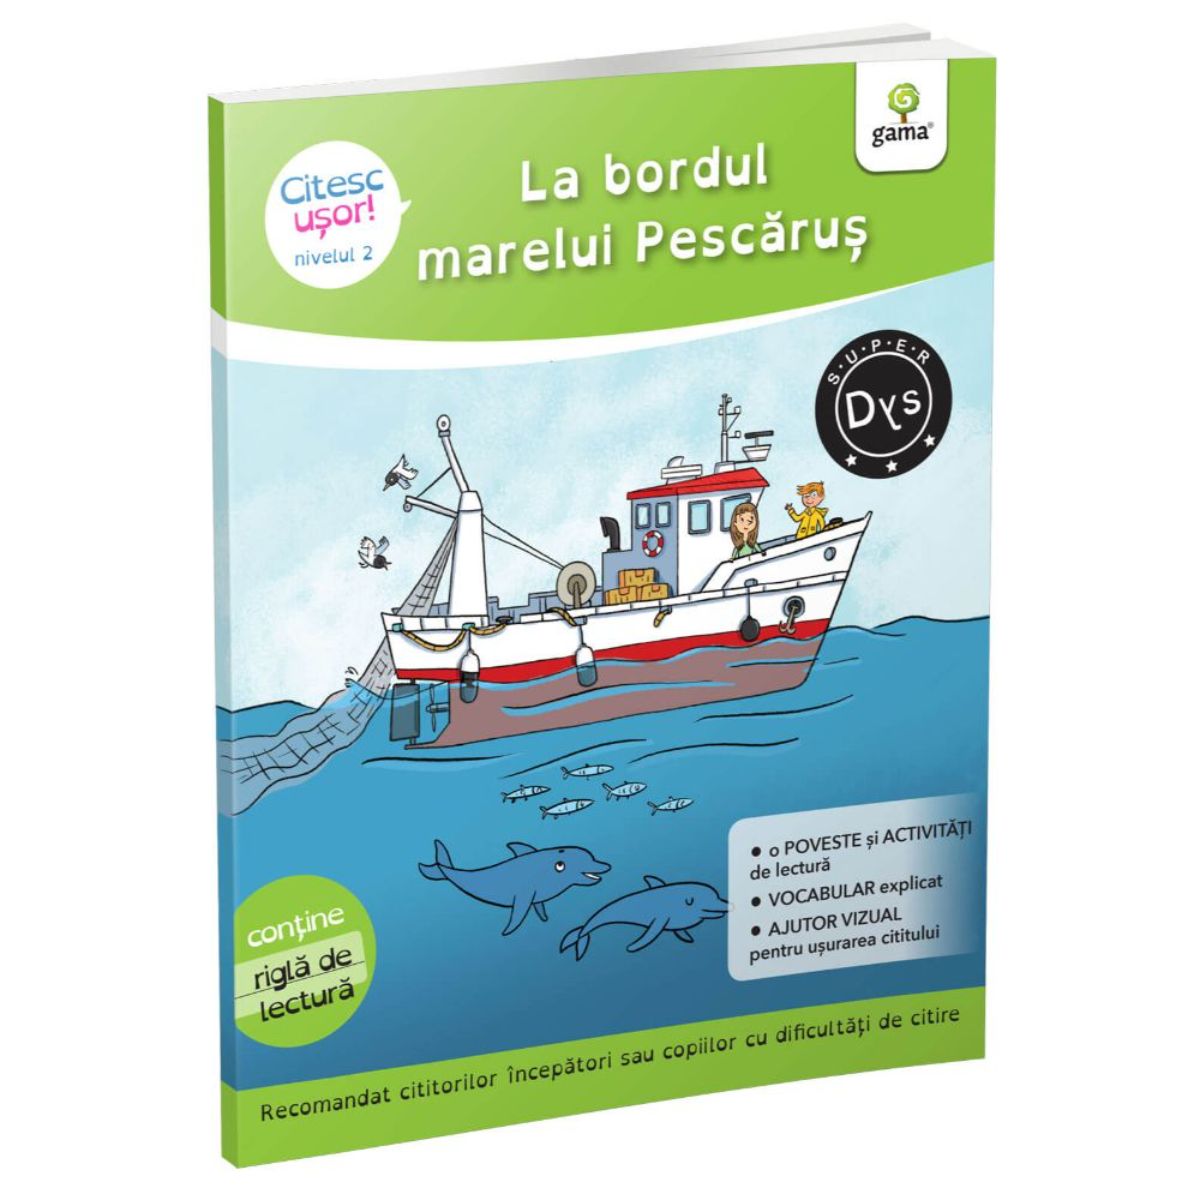 La bordul marelui Pescarus, Citesc usor, Evelyne Barge, Marco Overzee